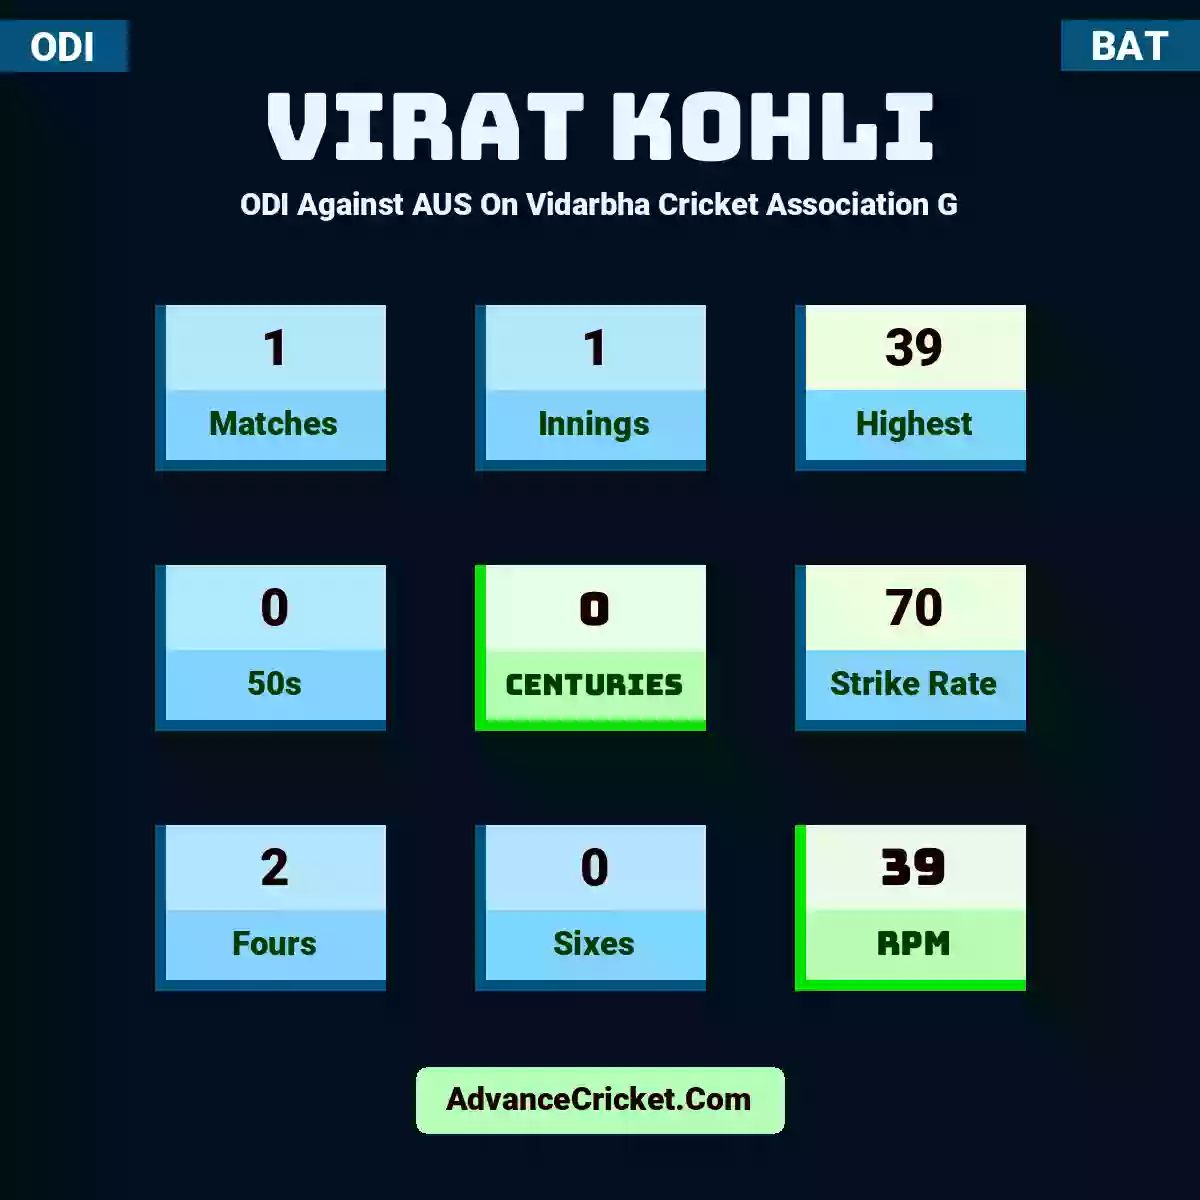 Virat Kohli ODI  Against AUS On Vidarbha Cricket Association G, Virat Kohli played 1 matches, scored 39 runs as highest, 0 half-centuries, and 0 centuries, with a strike rate of 70. V.Kohli hit 2 fours and 0 sixes, with an RPM of 39.